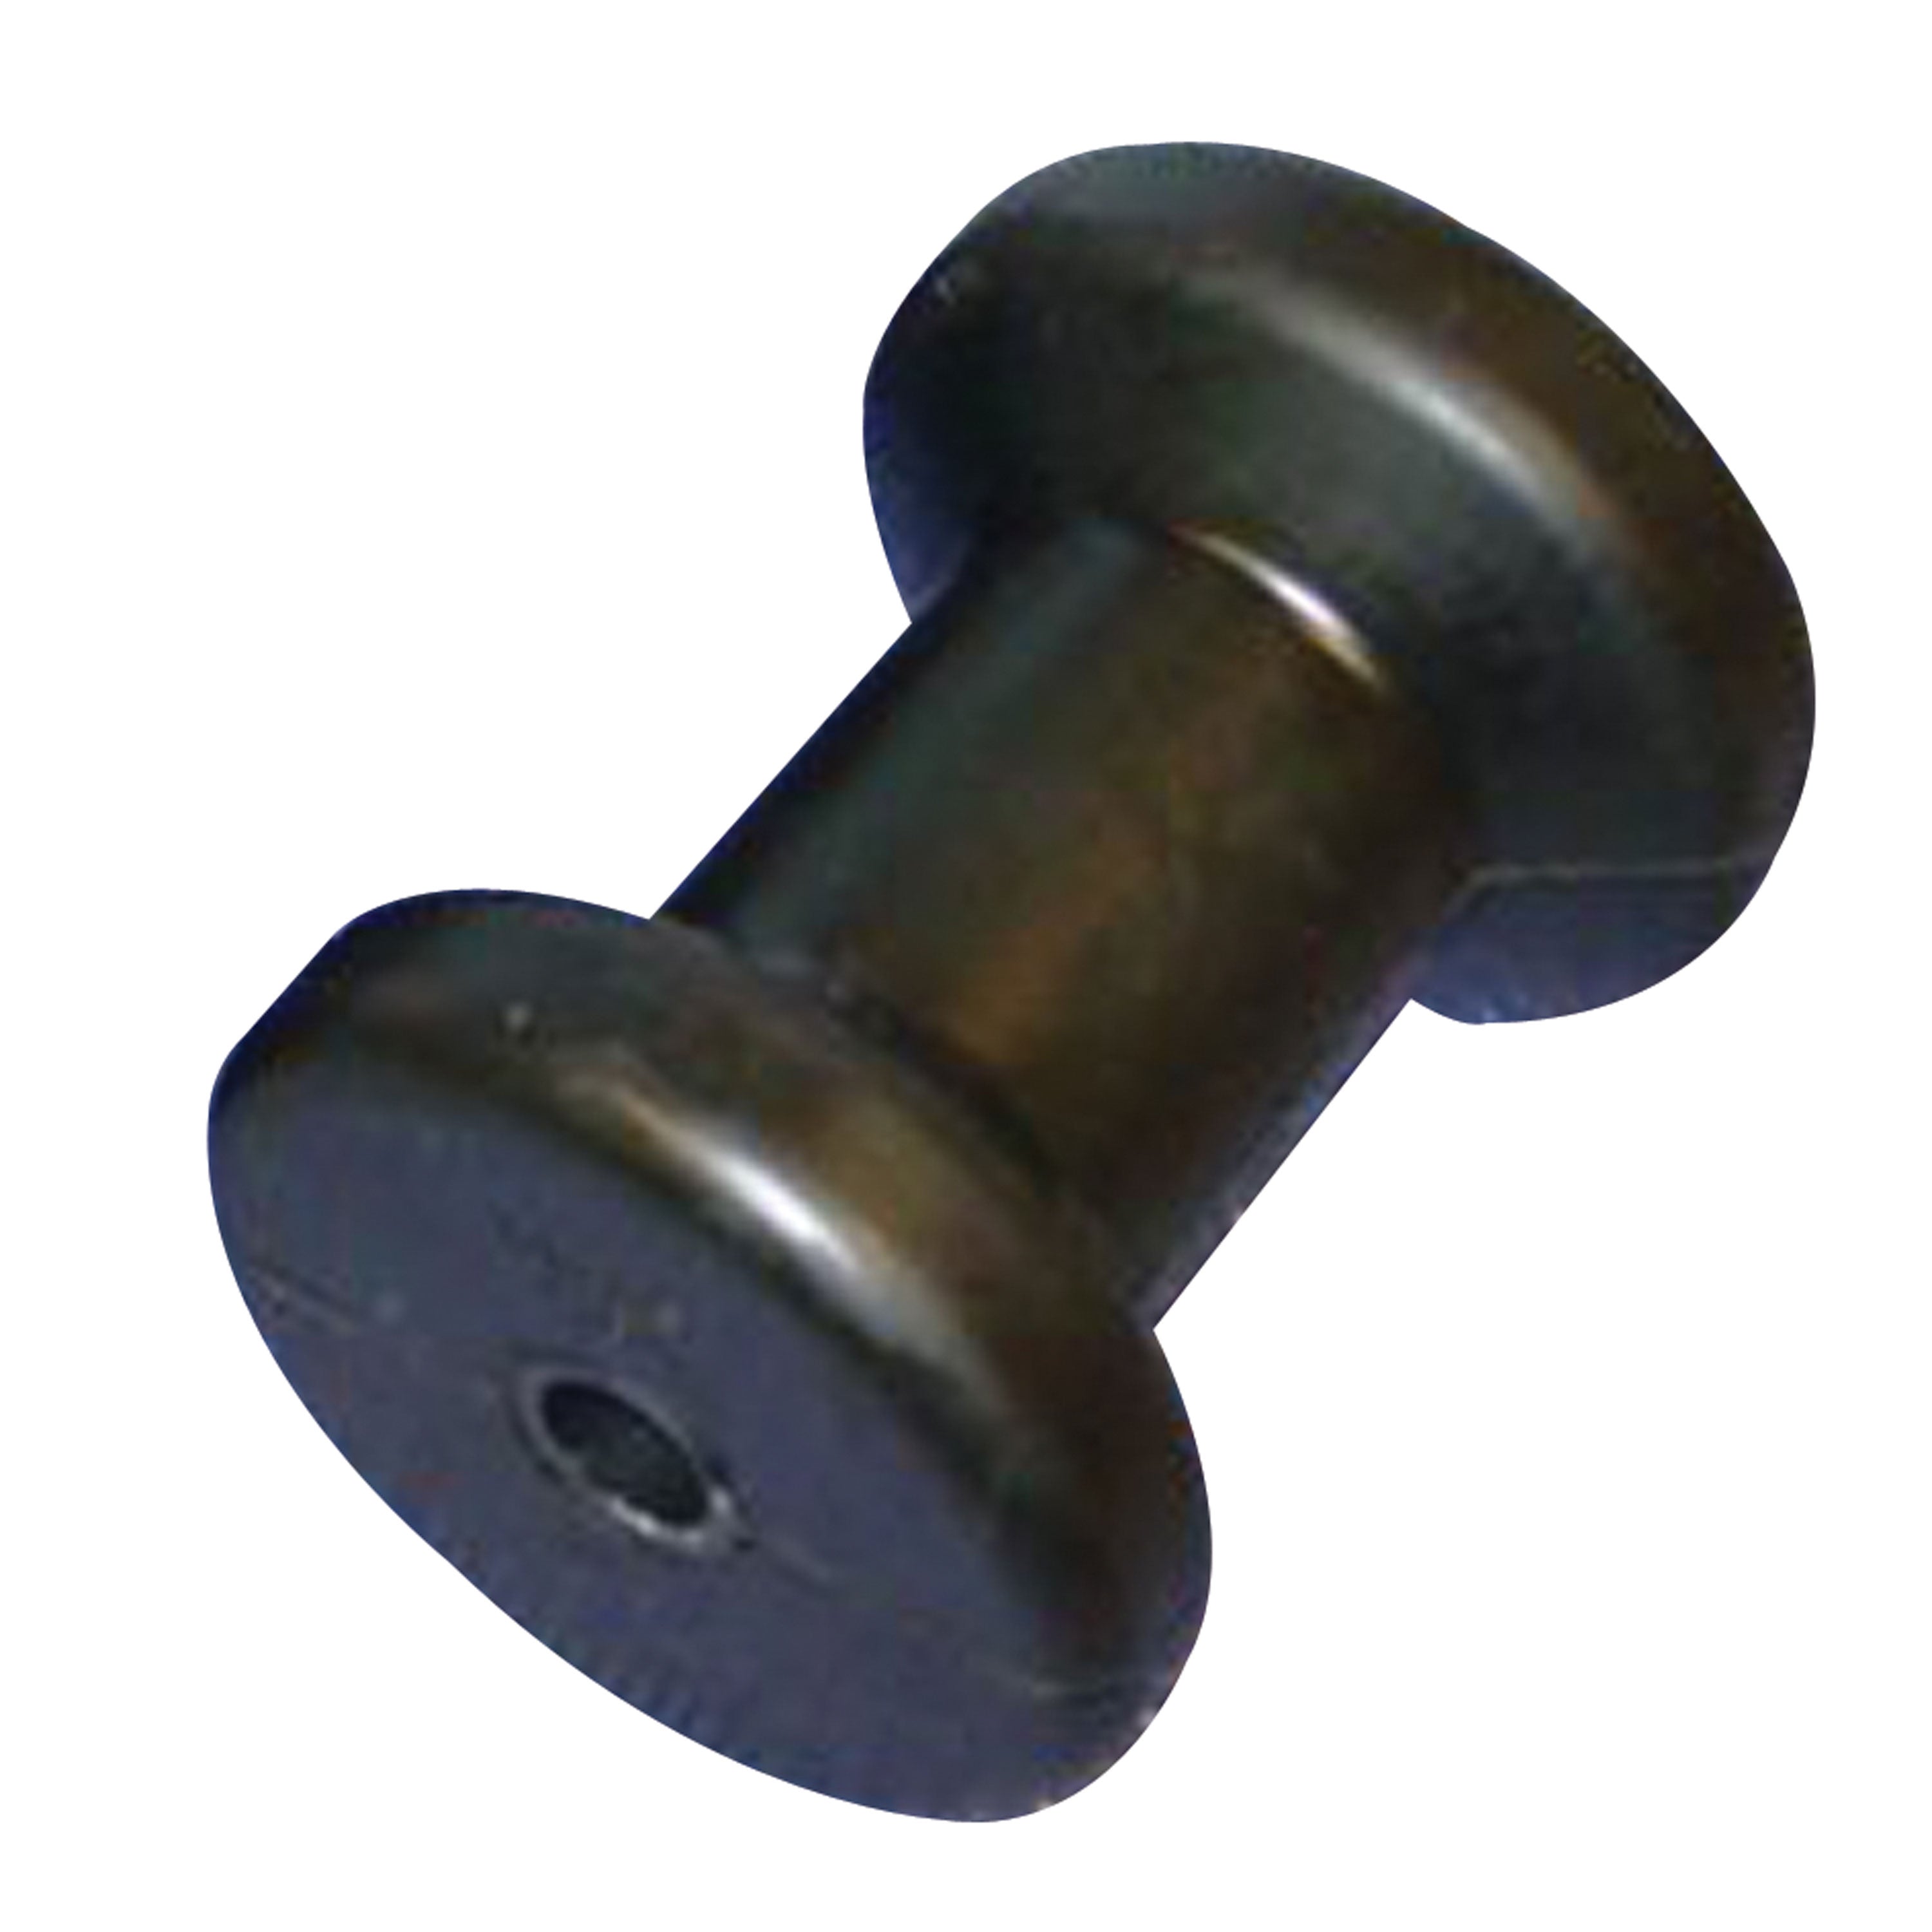 C.H. Yates 5203-5 Black Rubber Spool Roller - 5 in. x 0.625 in.